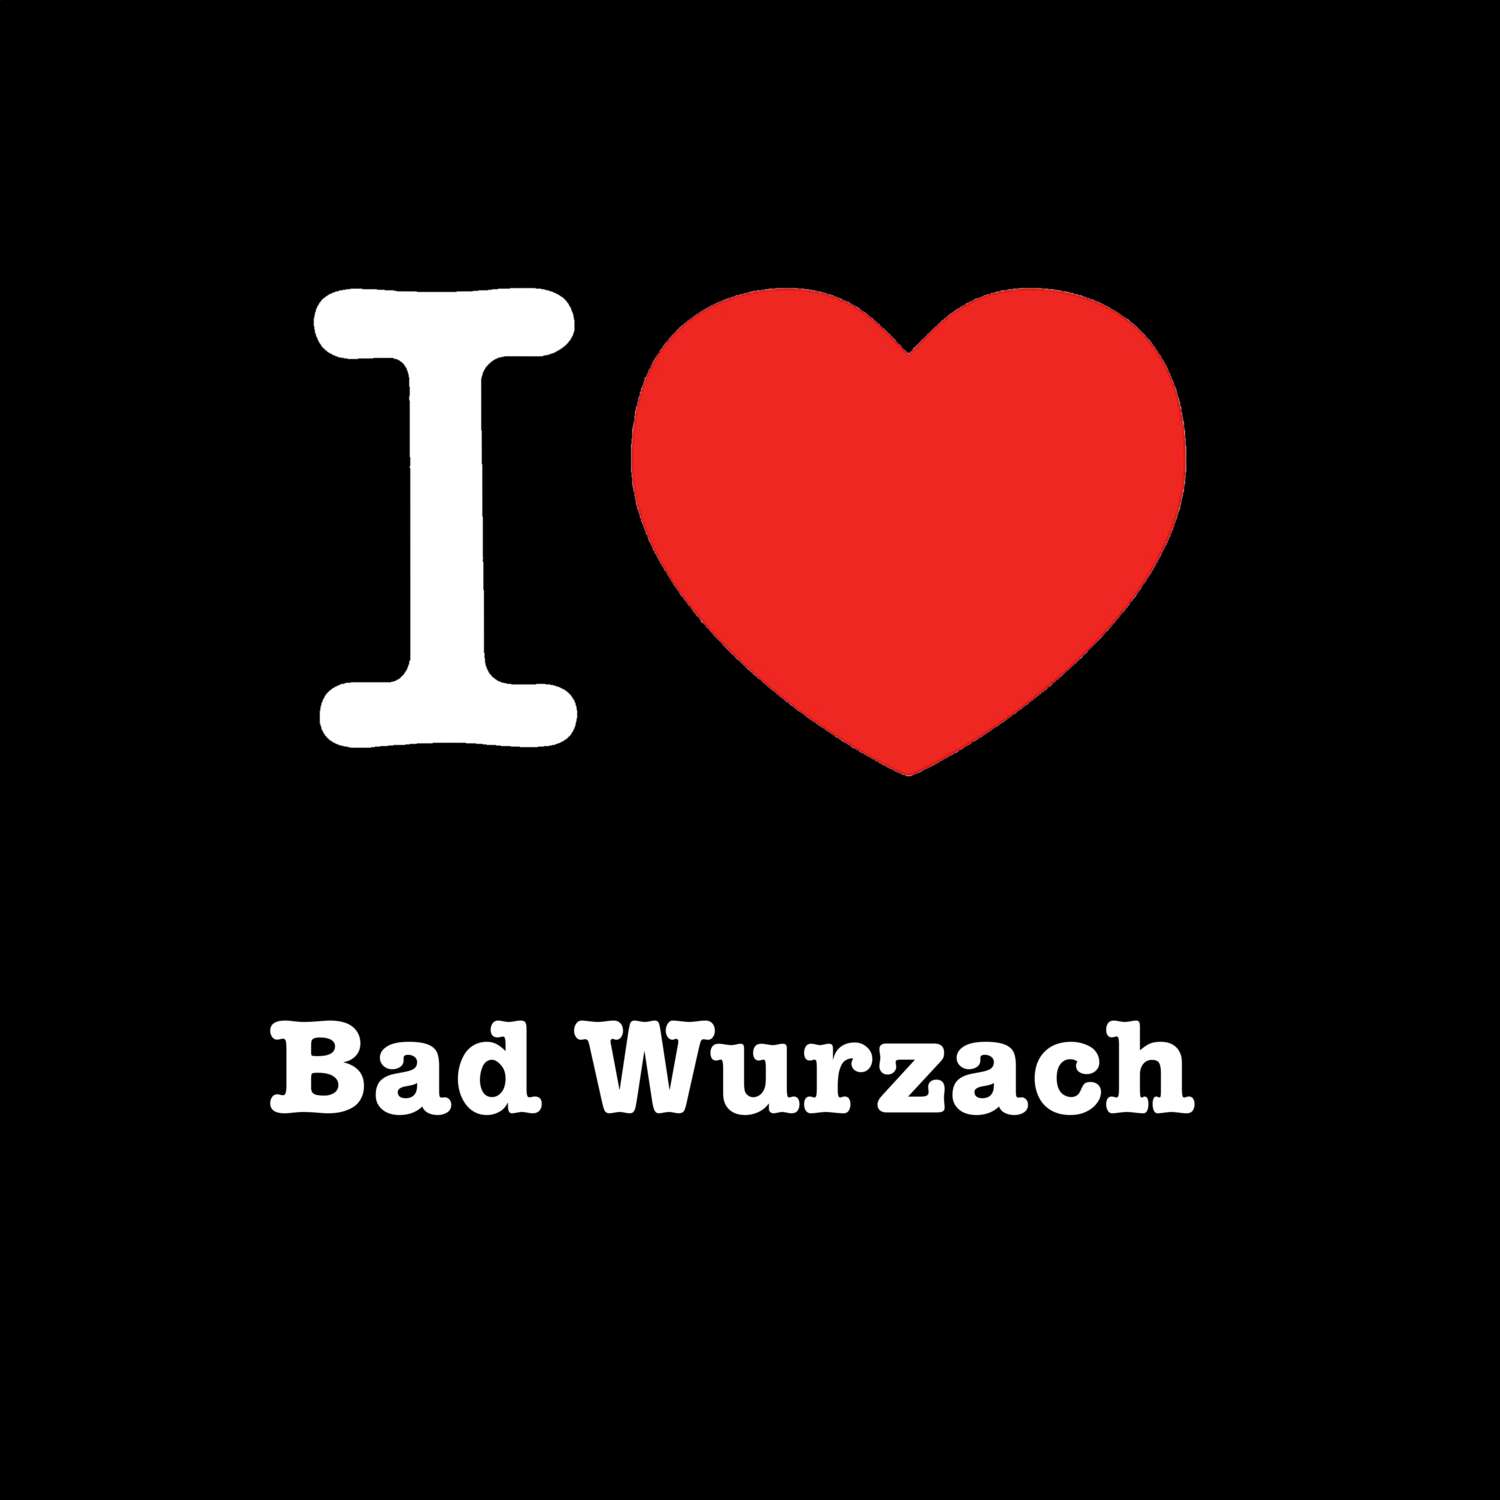 Bad Wurzach T-Shirt »I love«